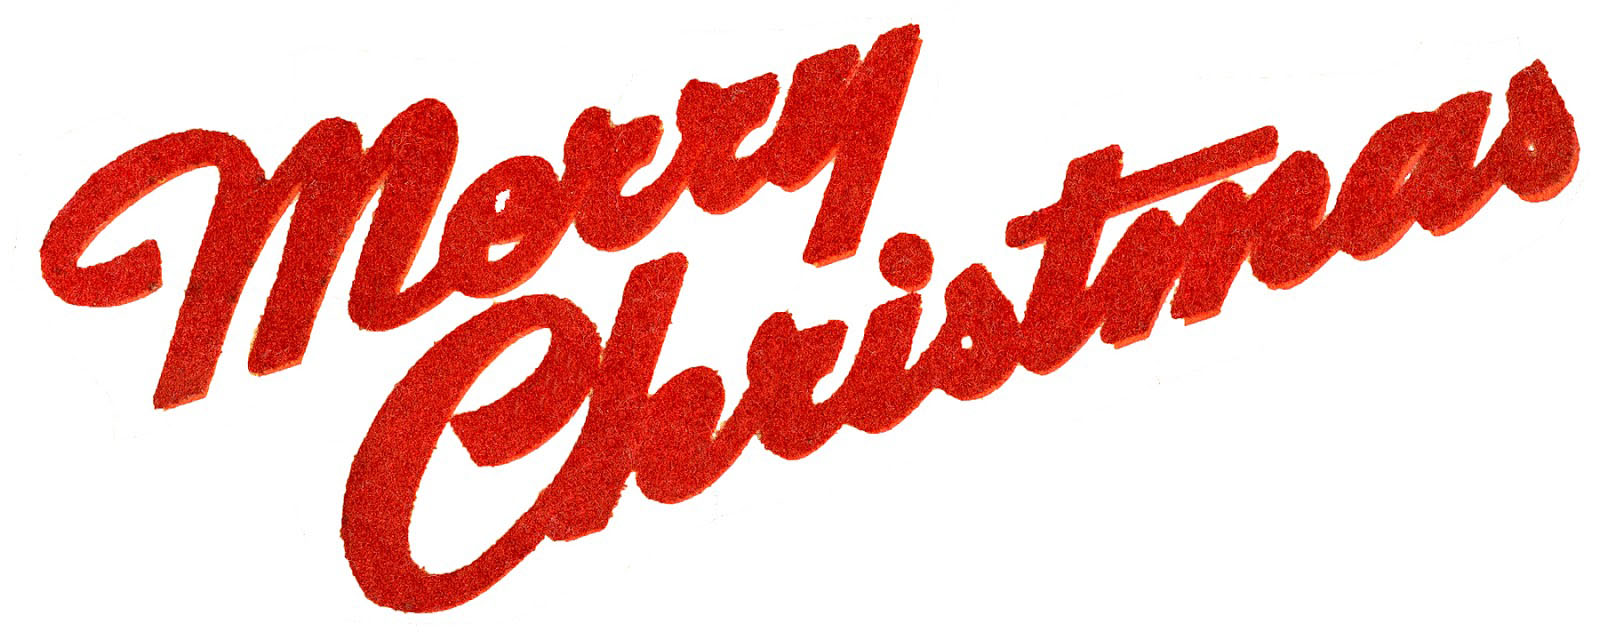 merry christmas vintage text